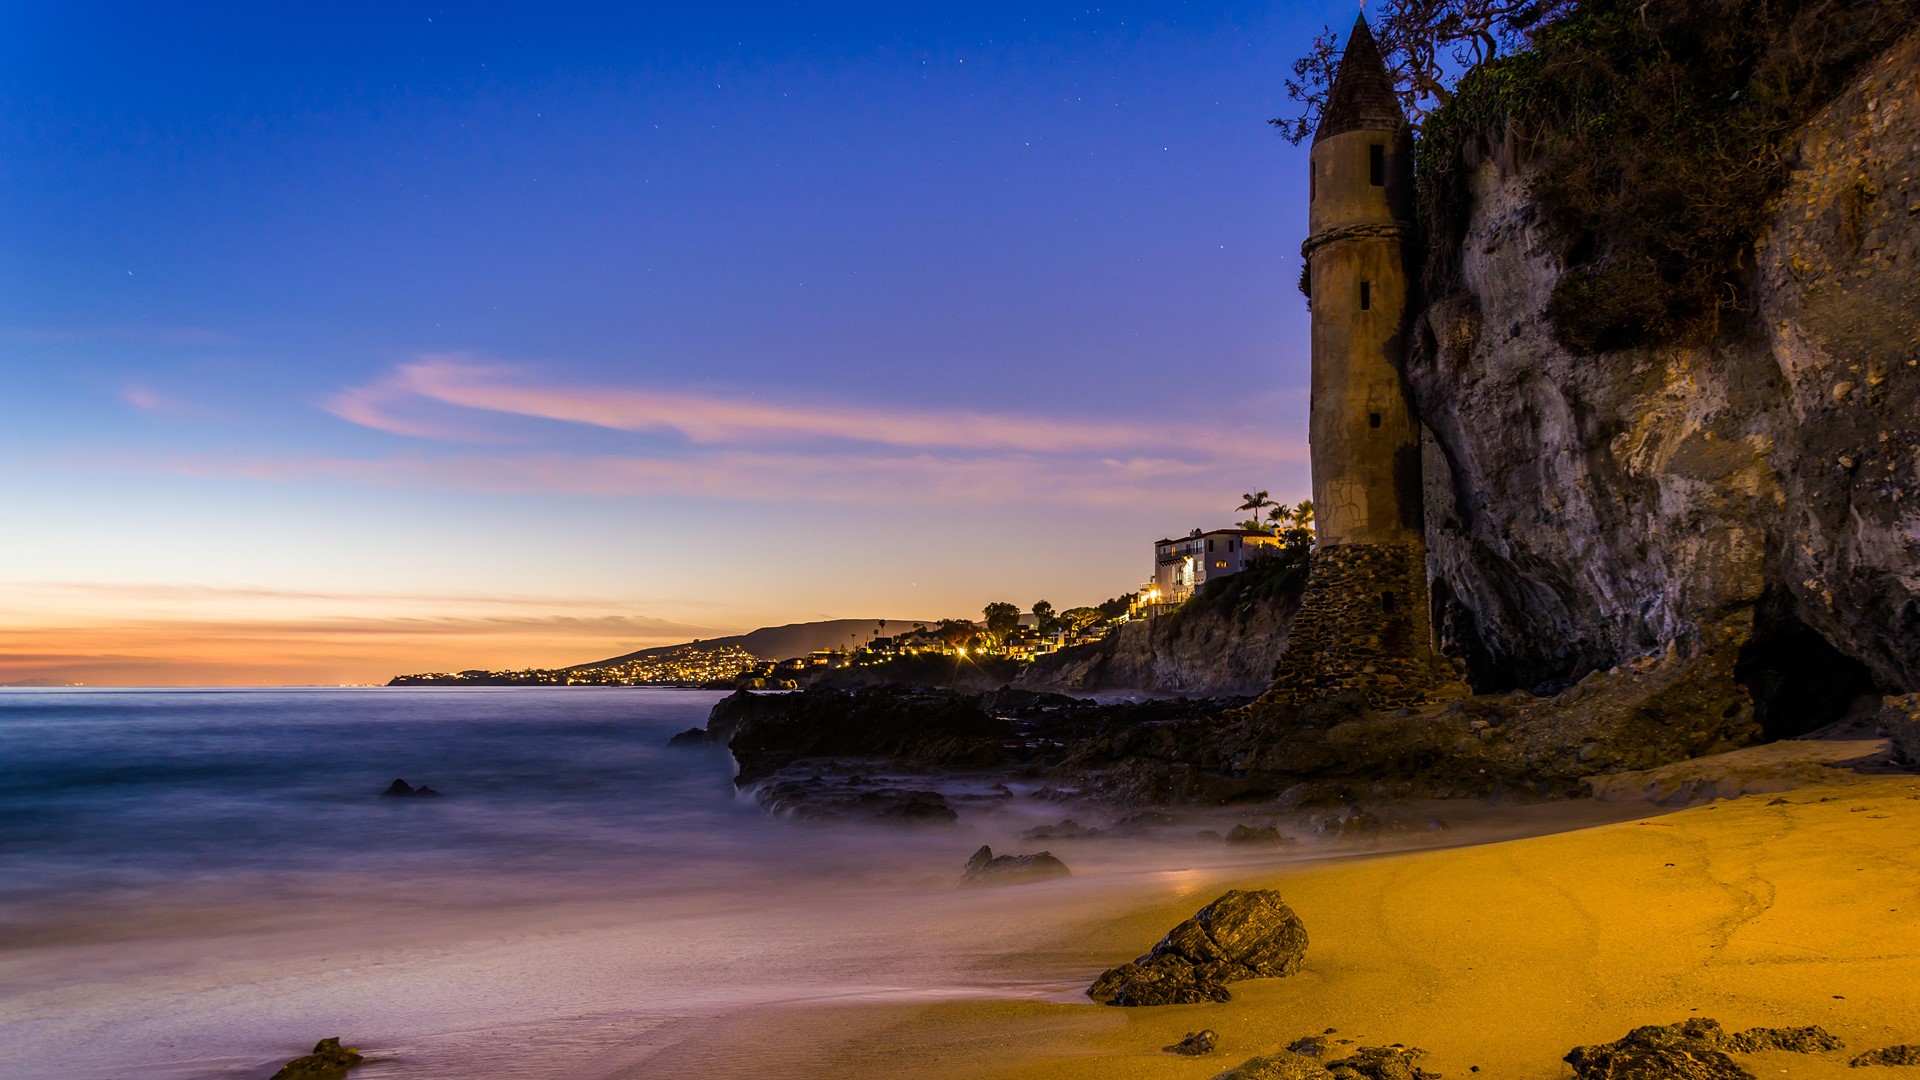 Victoria Beach Tower at sunset, Laguna Beach, California, USA. Windows 10 Spotlight Image